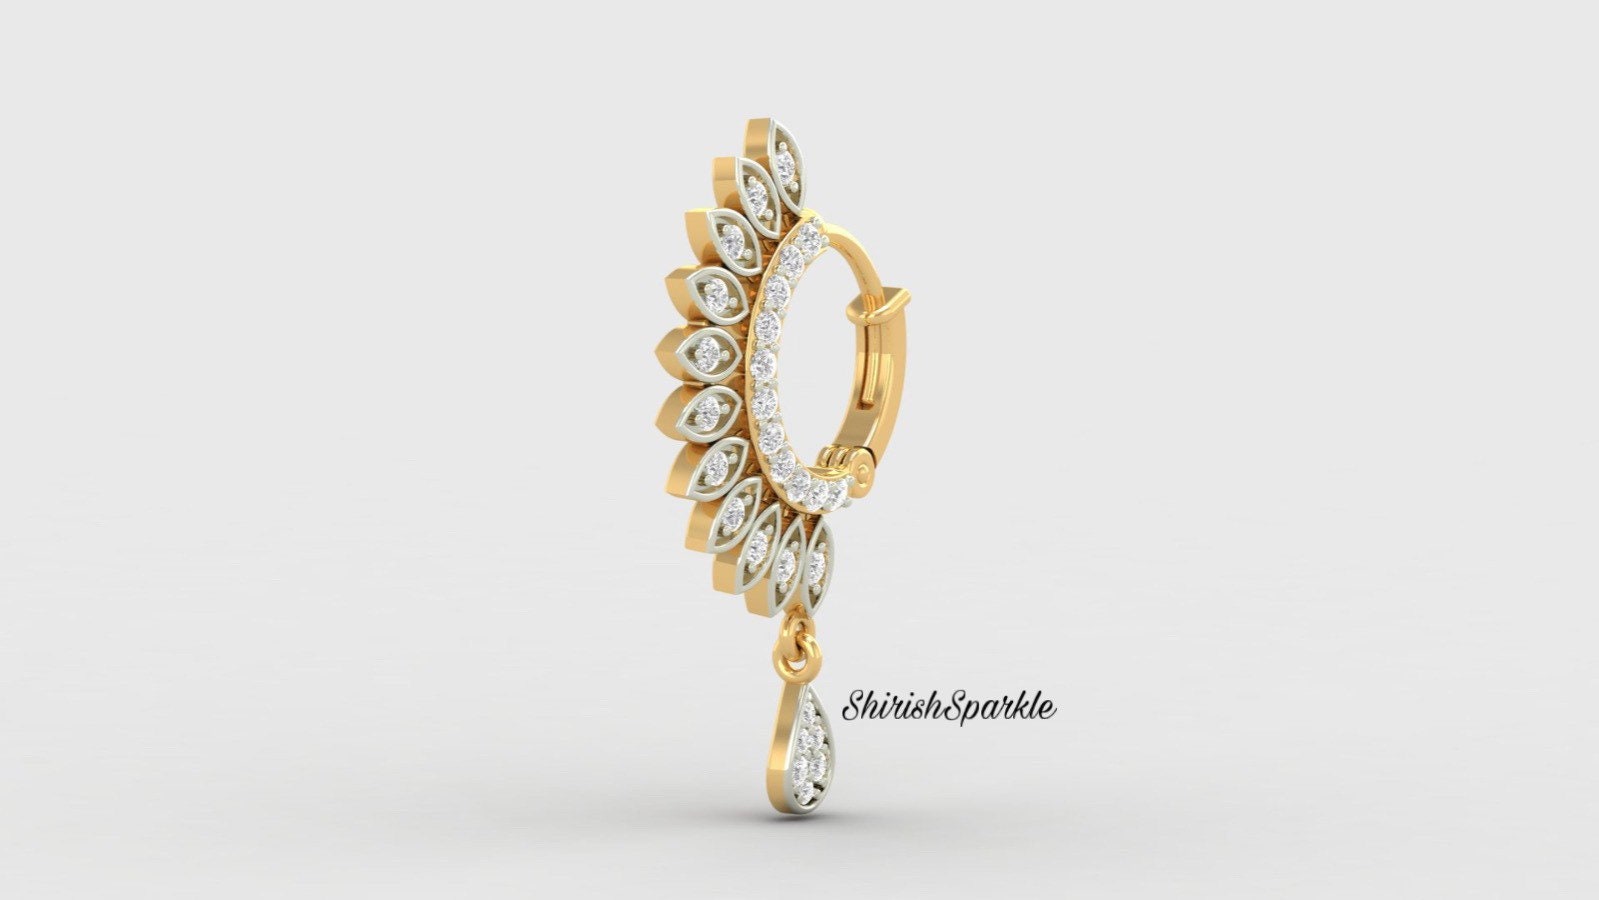 Ind2 14K Gold Nose ring – Noita Designs